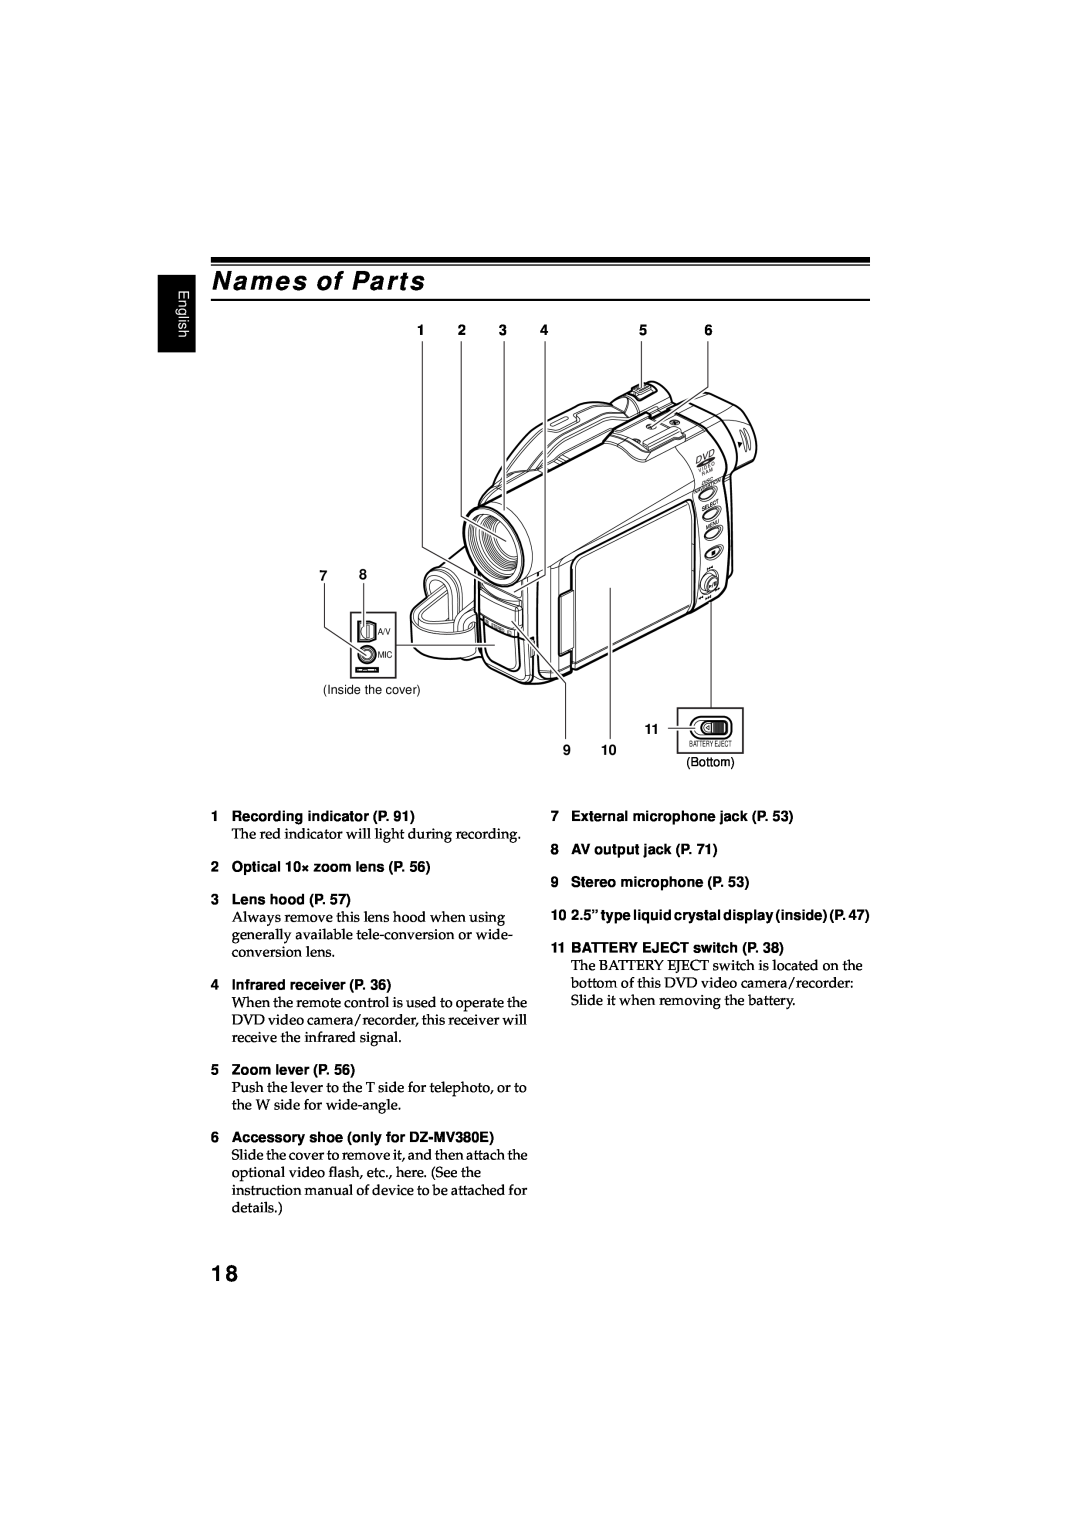 Hitachi DZMV380E Names of Parts, Recording indicator P, Optical 10× zoom lens P 3 Lens hood P, Infrared receiver P 